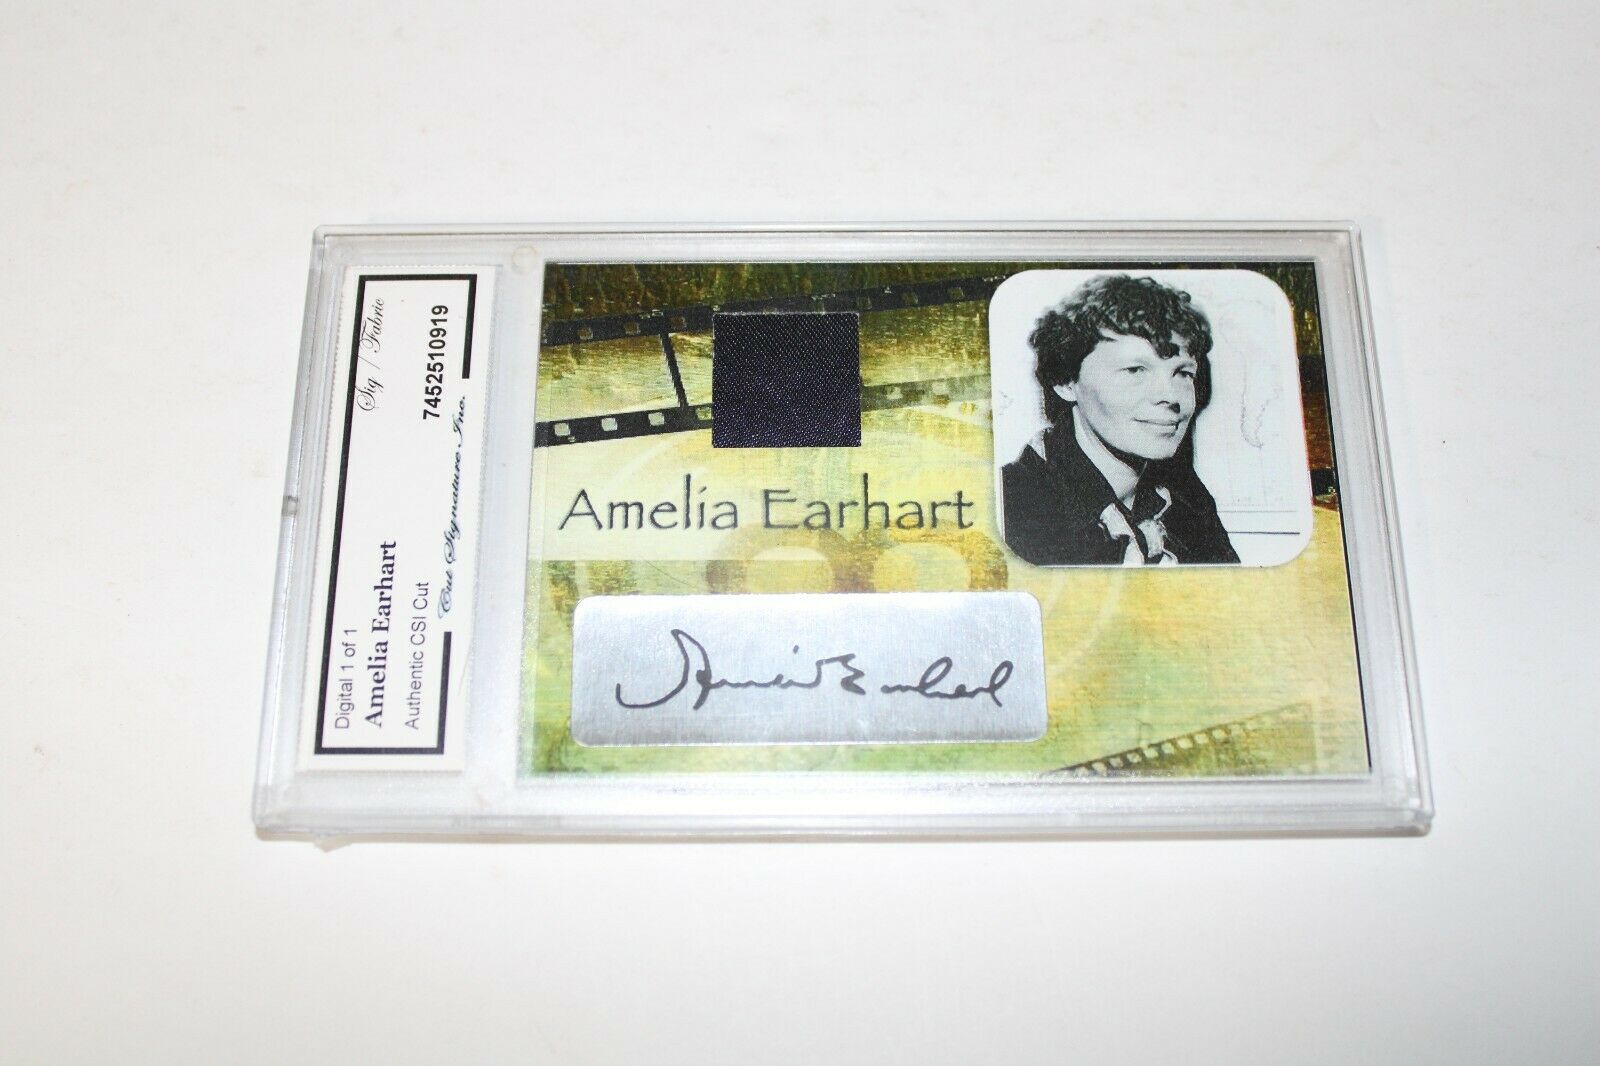 Amelia Earhart, "authentic Csi Cut" Reprint Autograph, Replica Material Cut 1/1